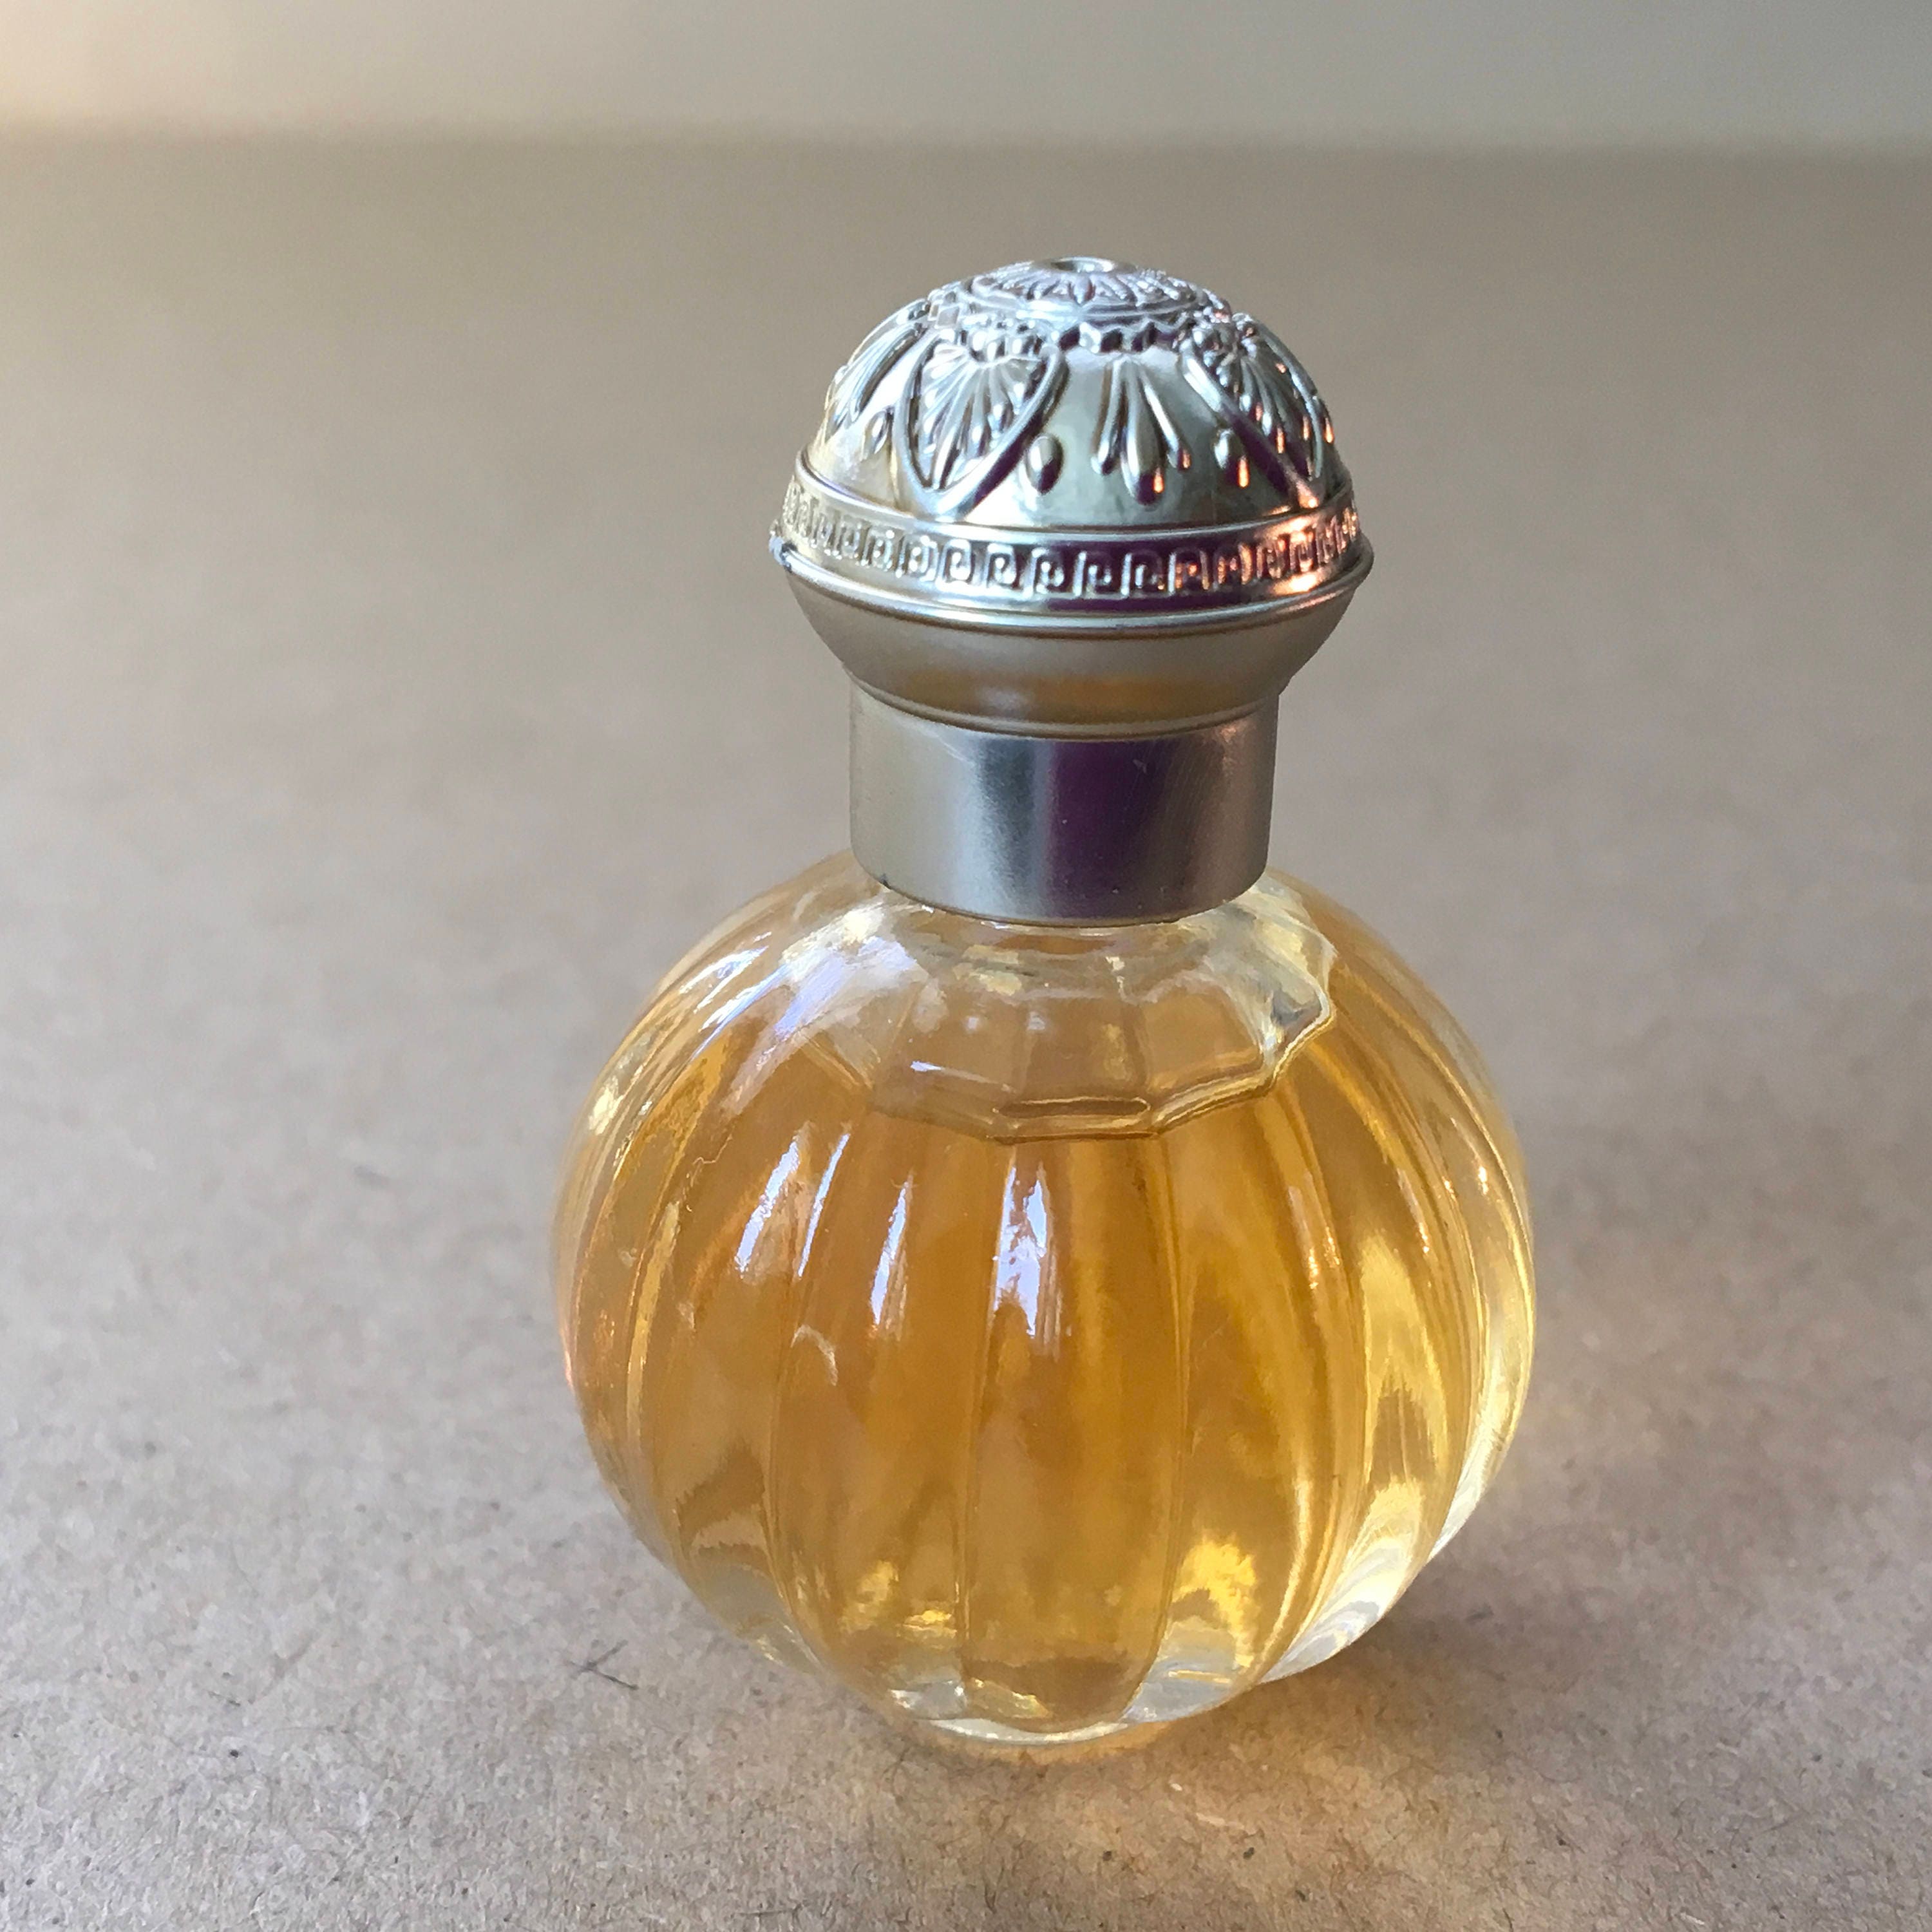 Perfume Mini Royal Doulton.5 Ml of Perfume. Exquisite - Etsy UK